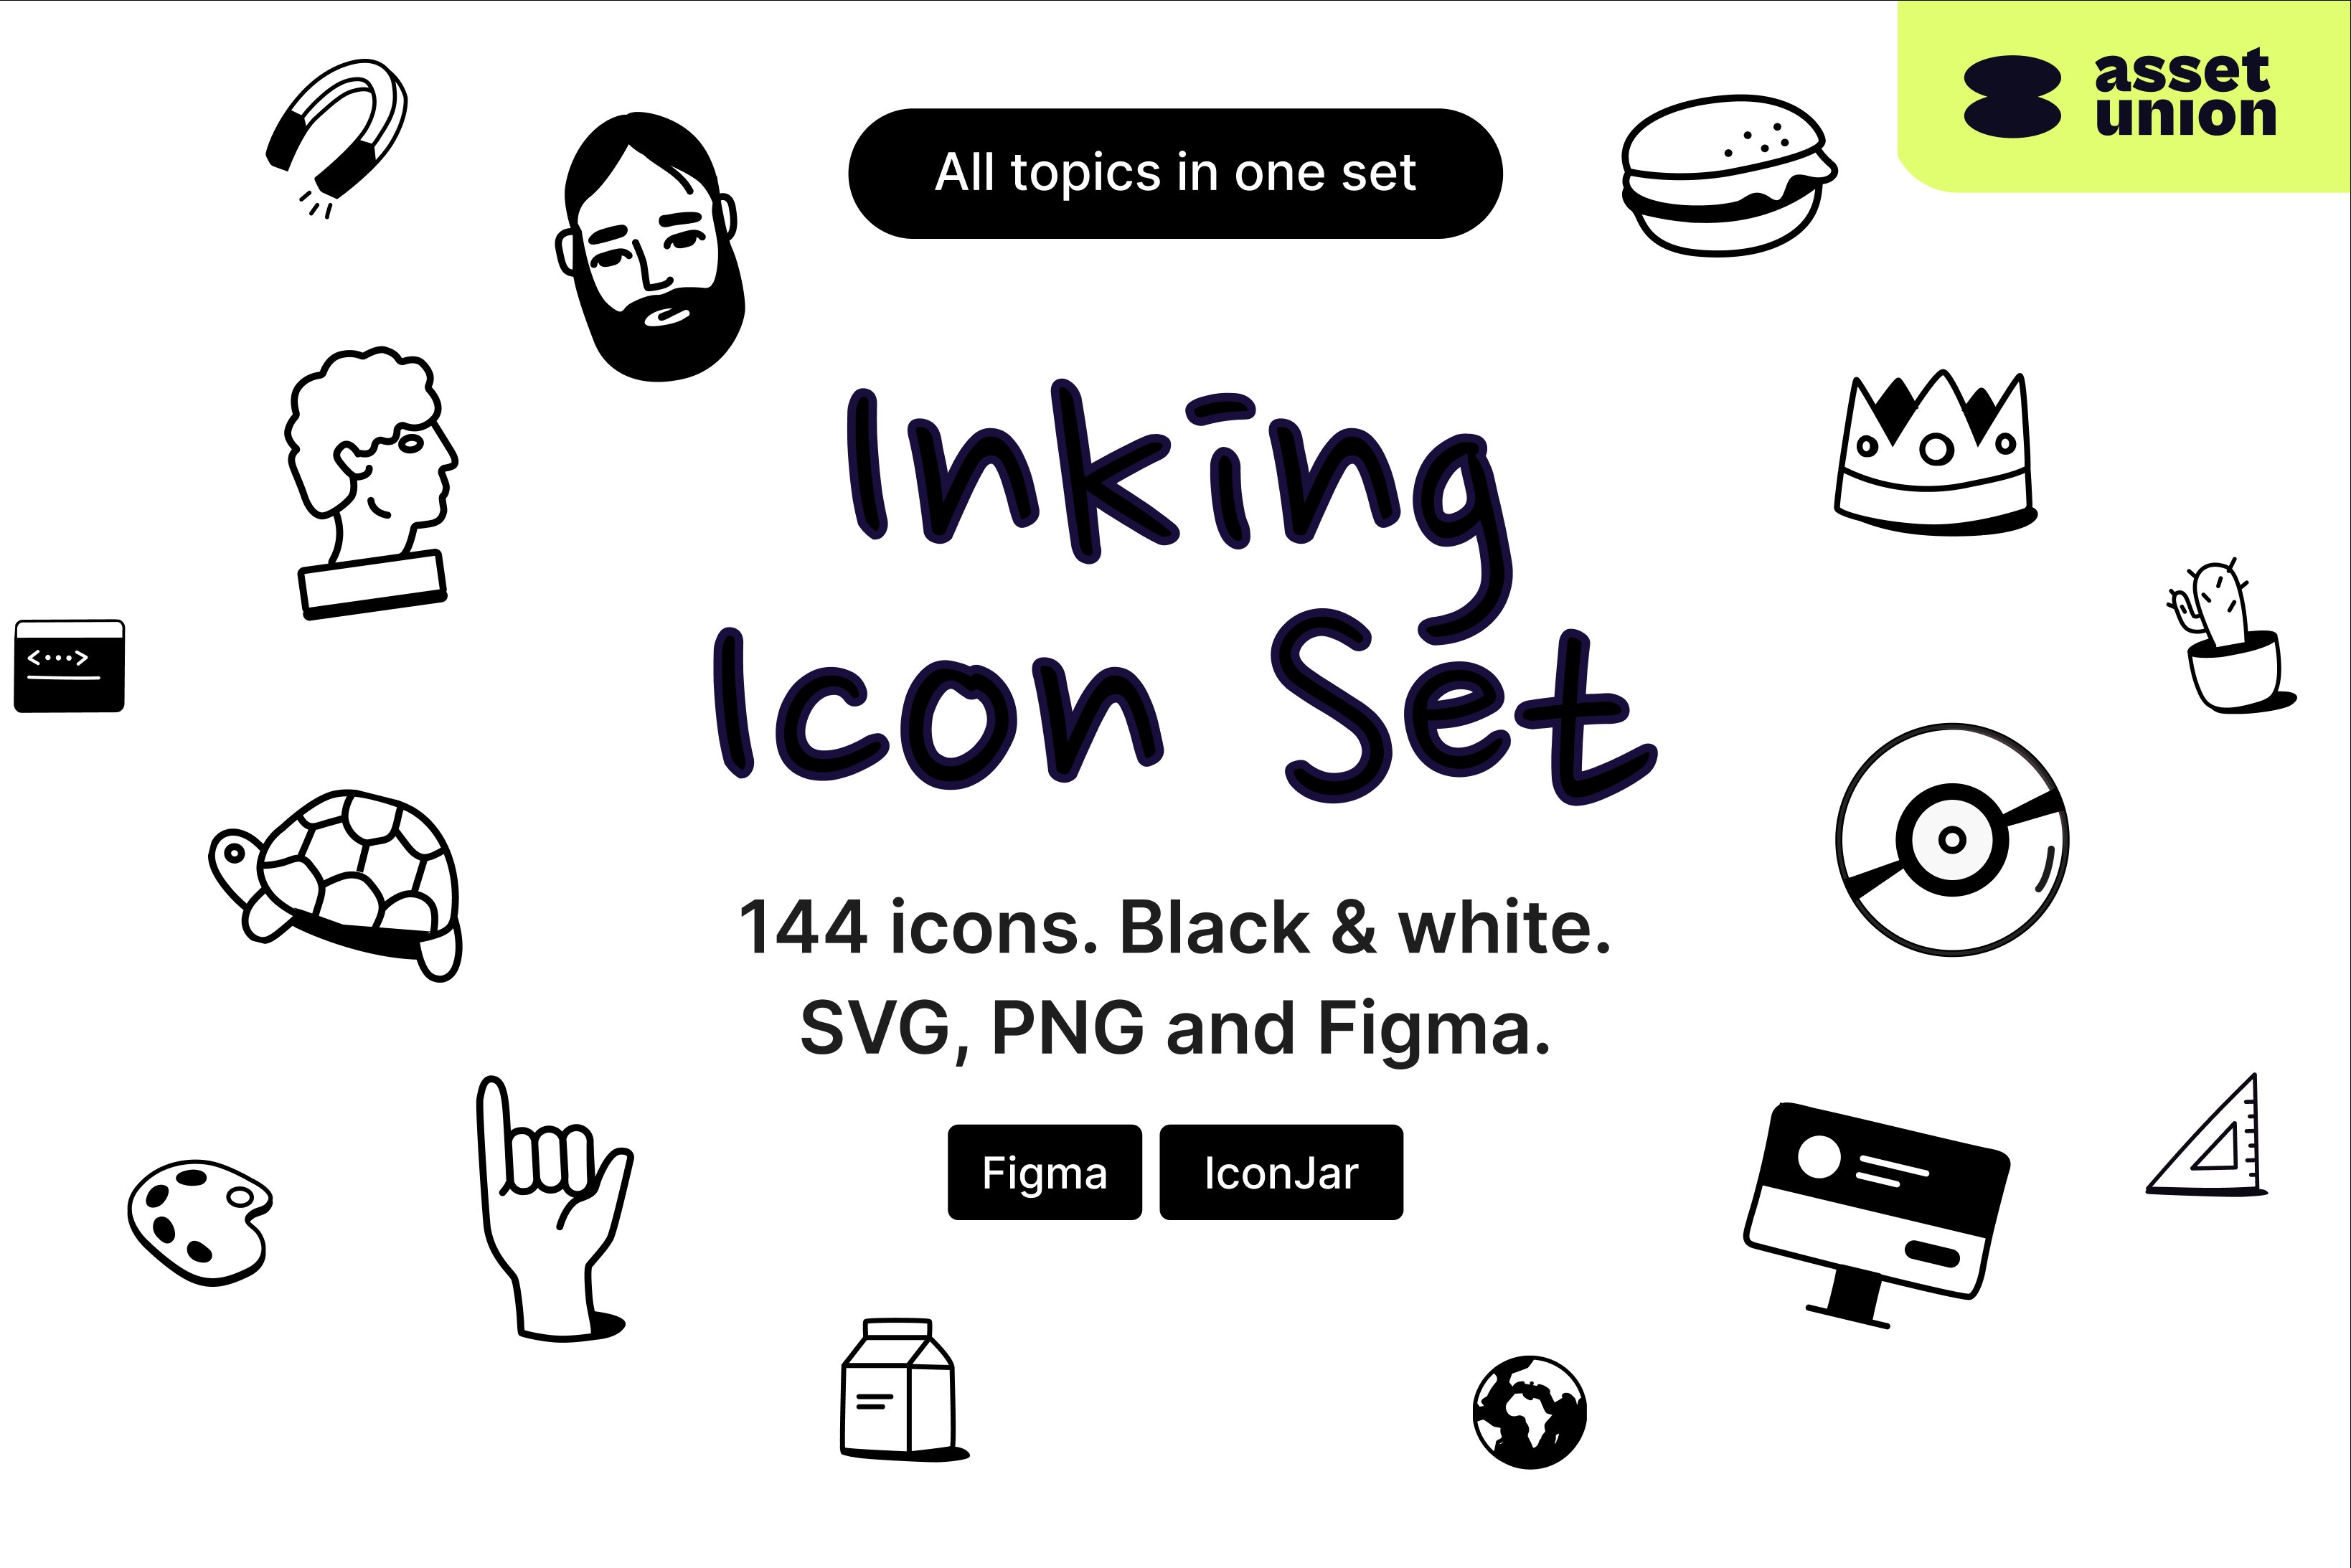 Inking Icon Set cover image.